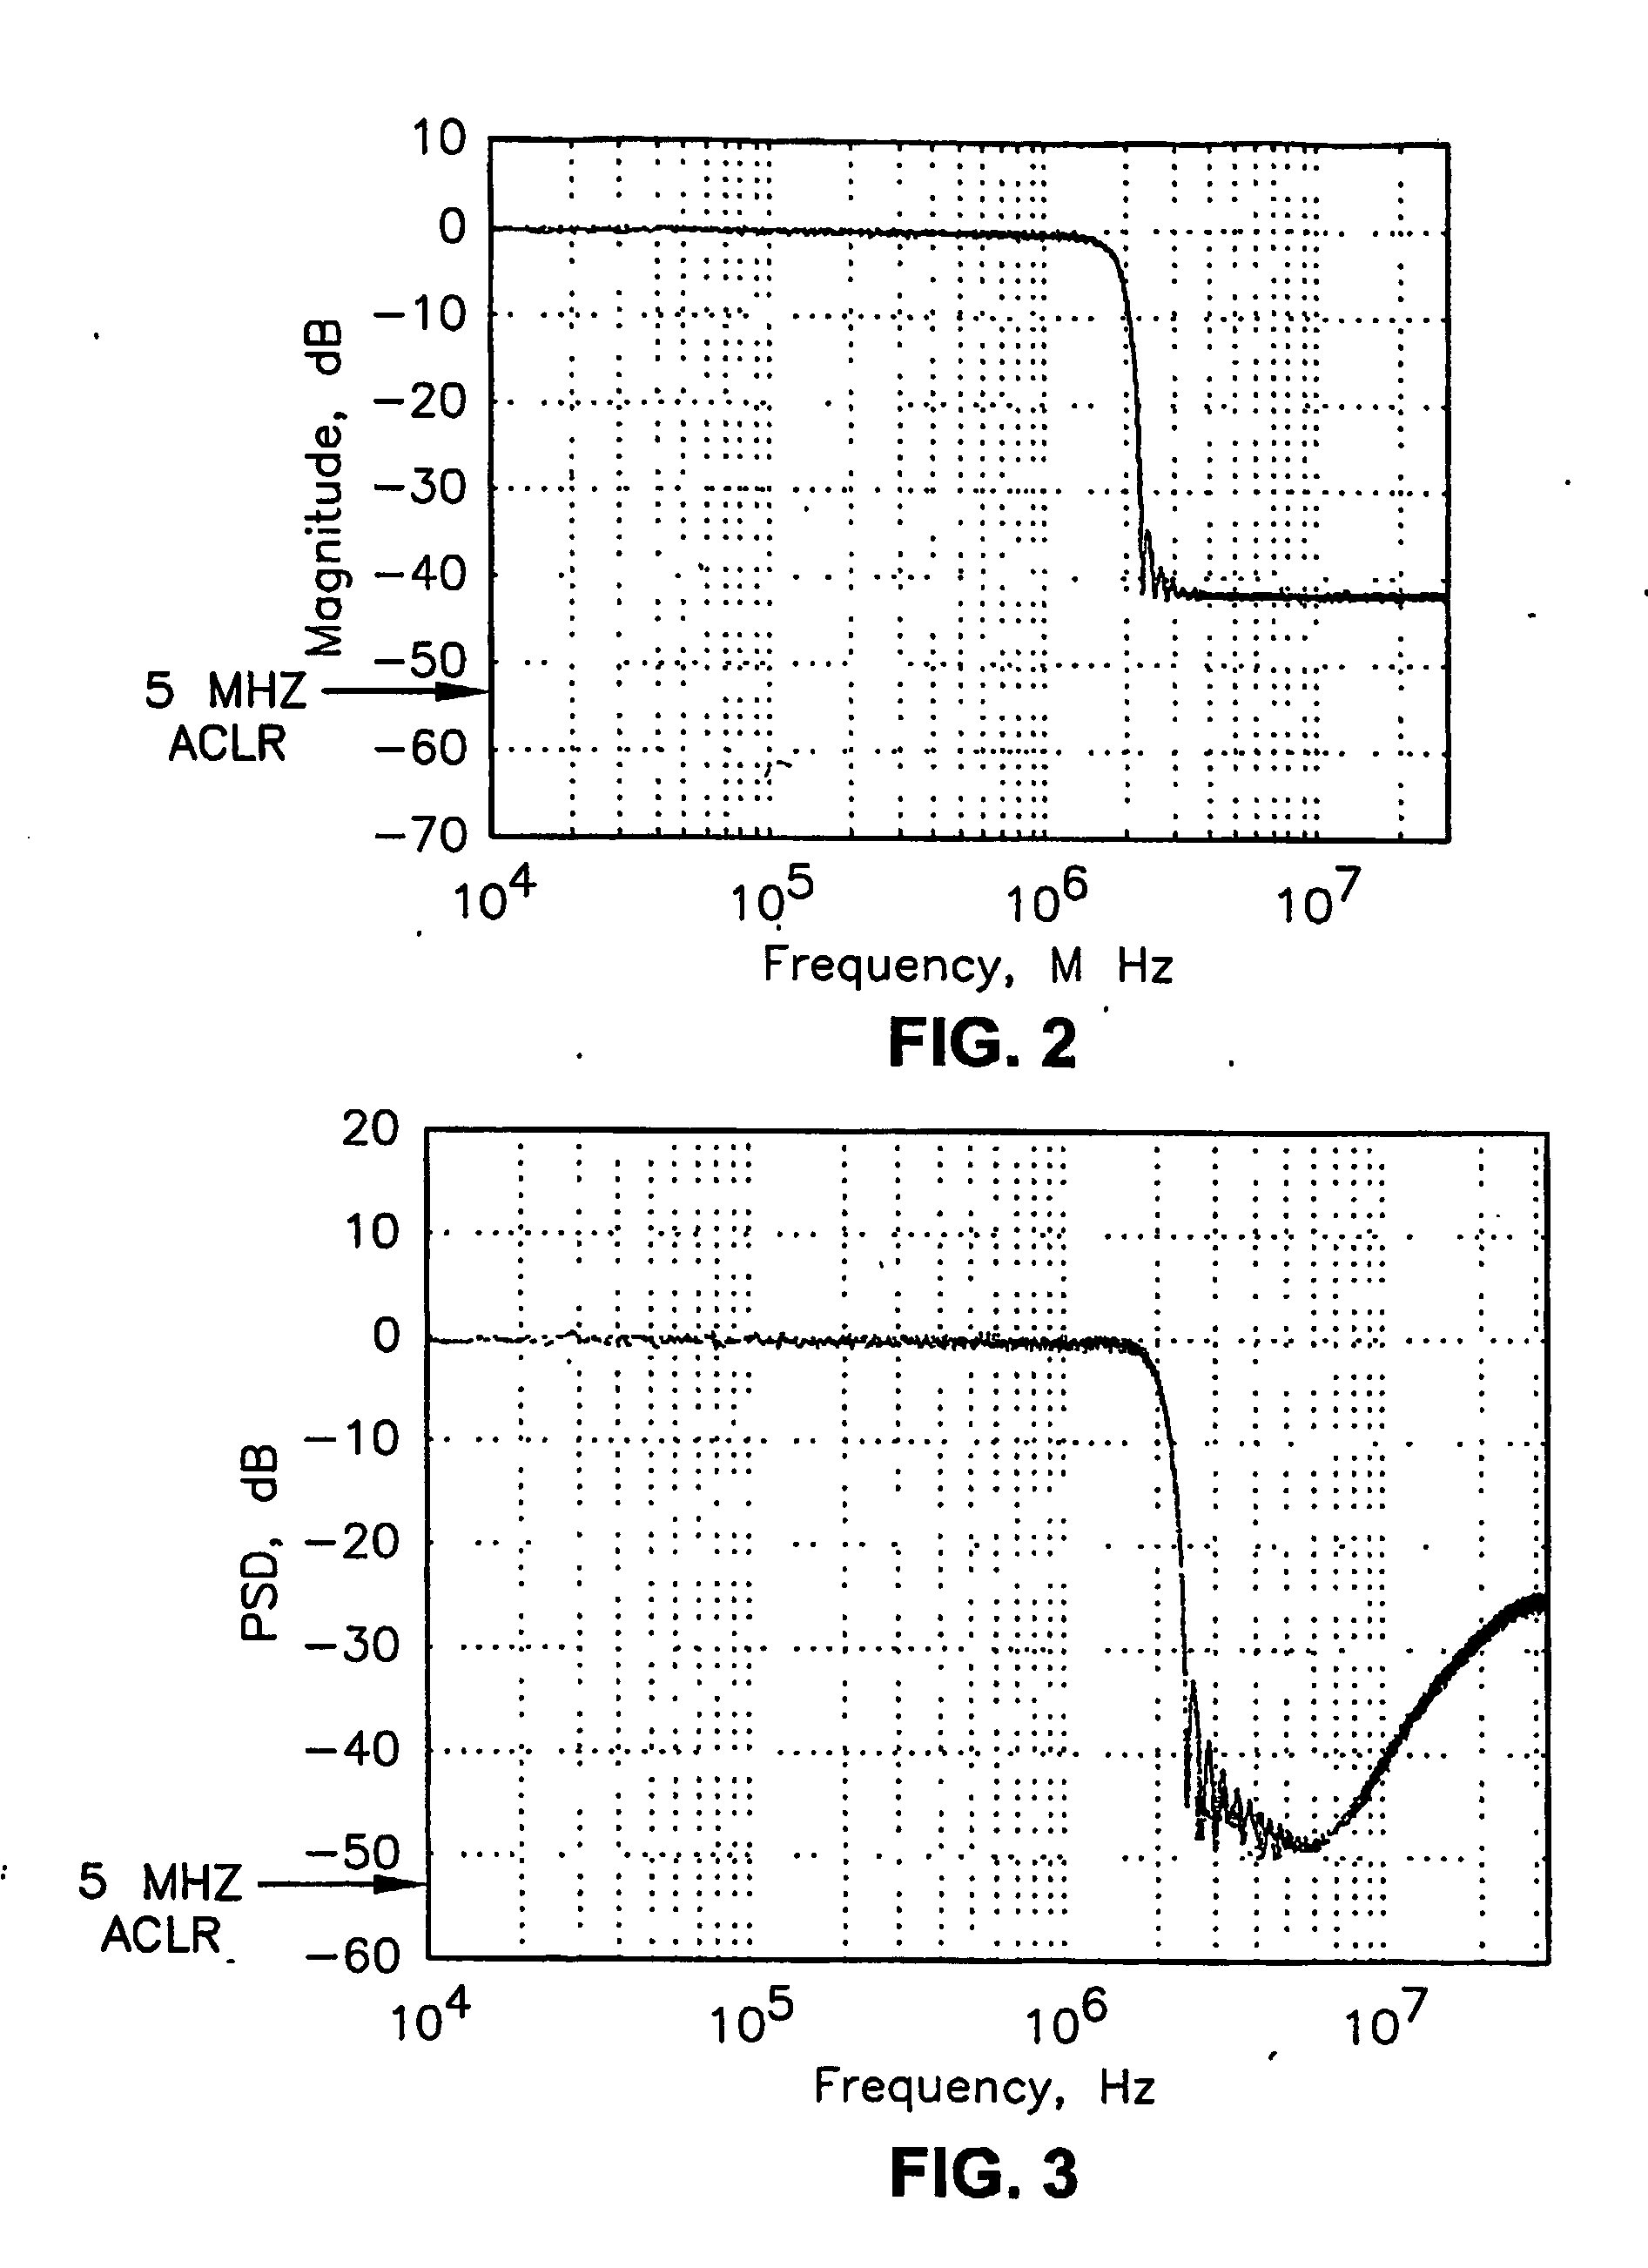 Bandpass delta sigma truncator and method of truncating a multi-bit digital signal